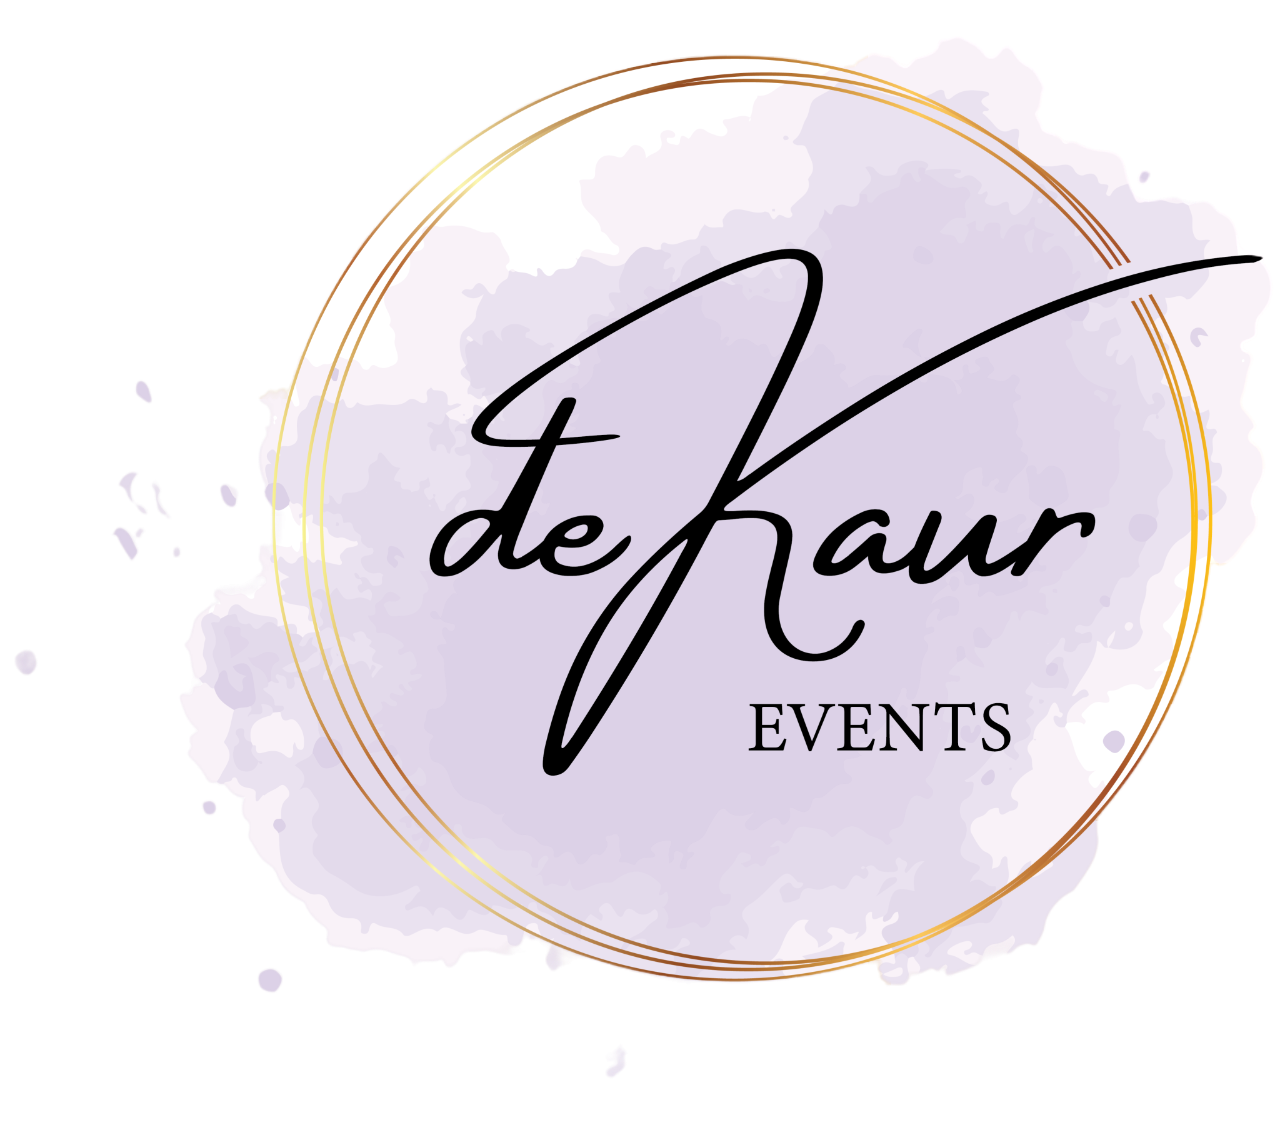 deKaur Events